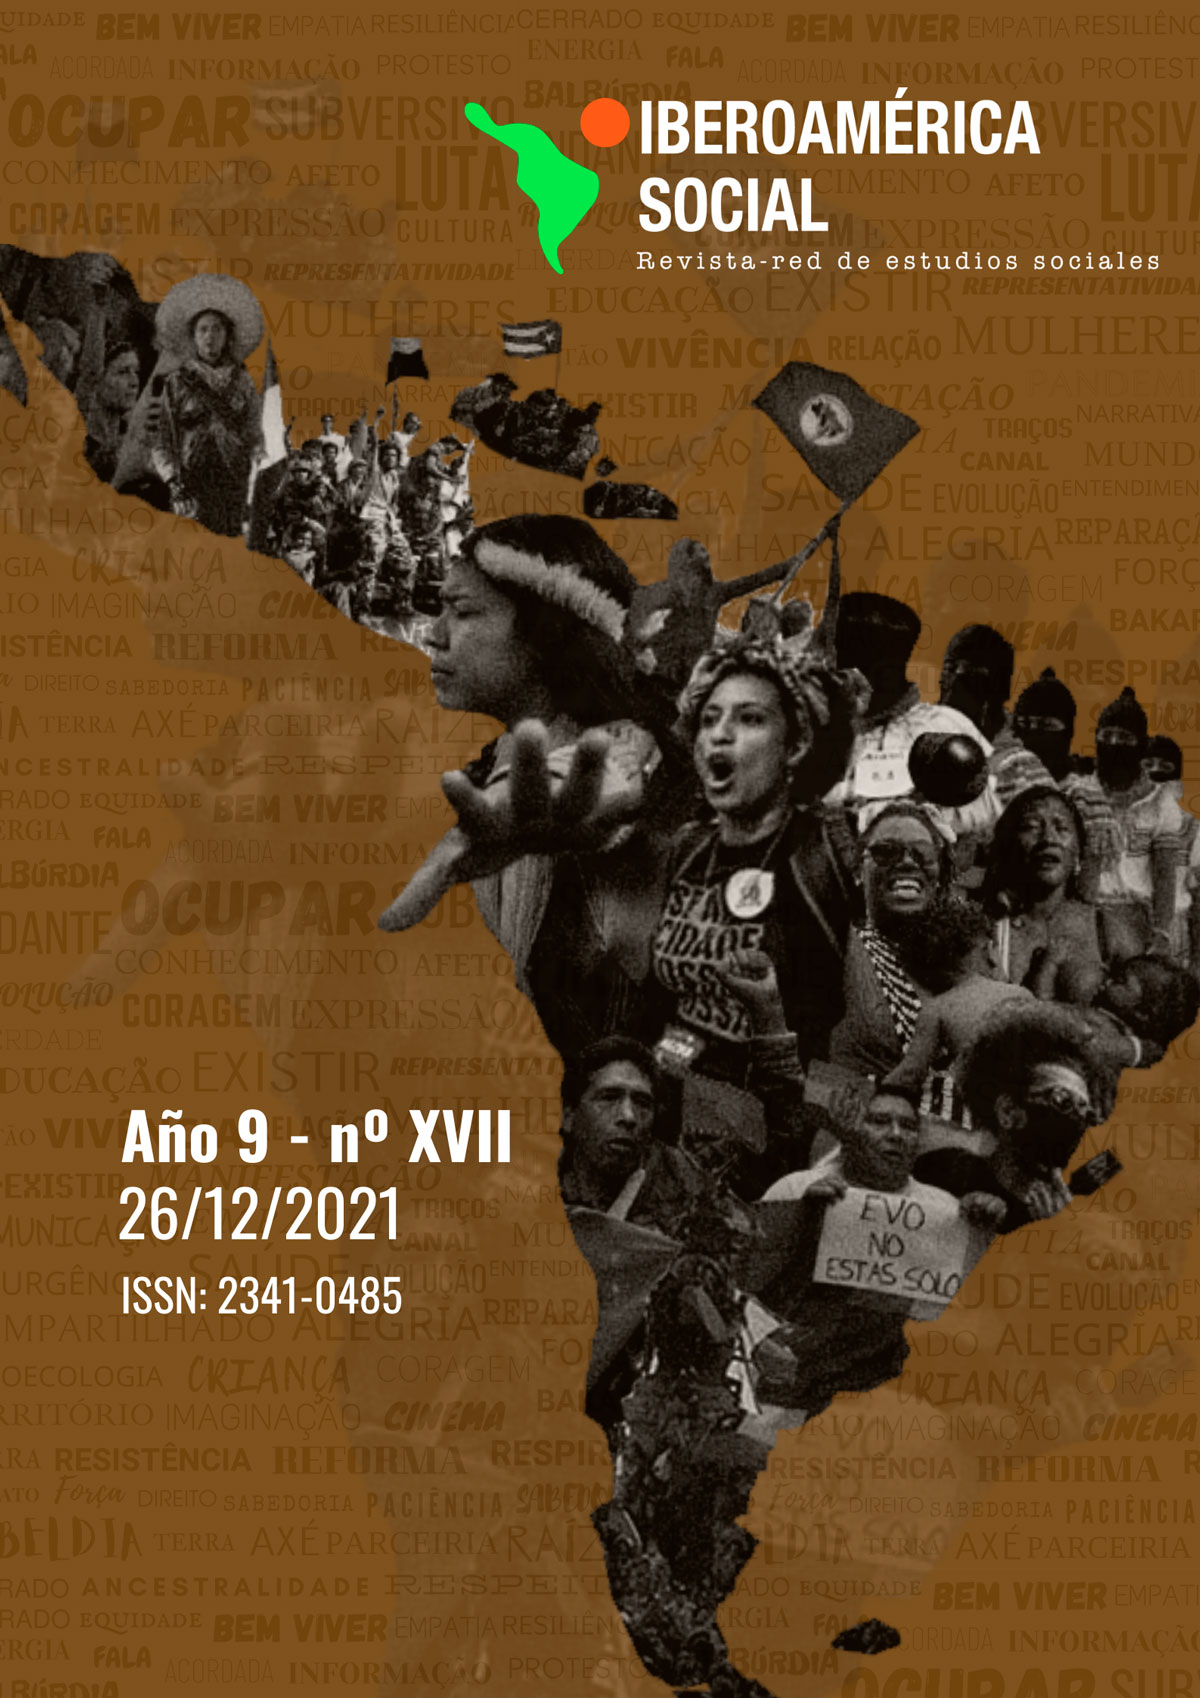 					Ver Núm. XVII (9): Iberoamérica Social: Revista-red de estudios sociales
				